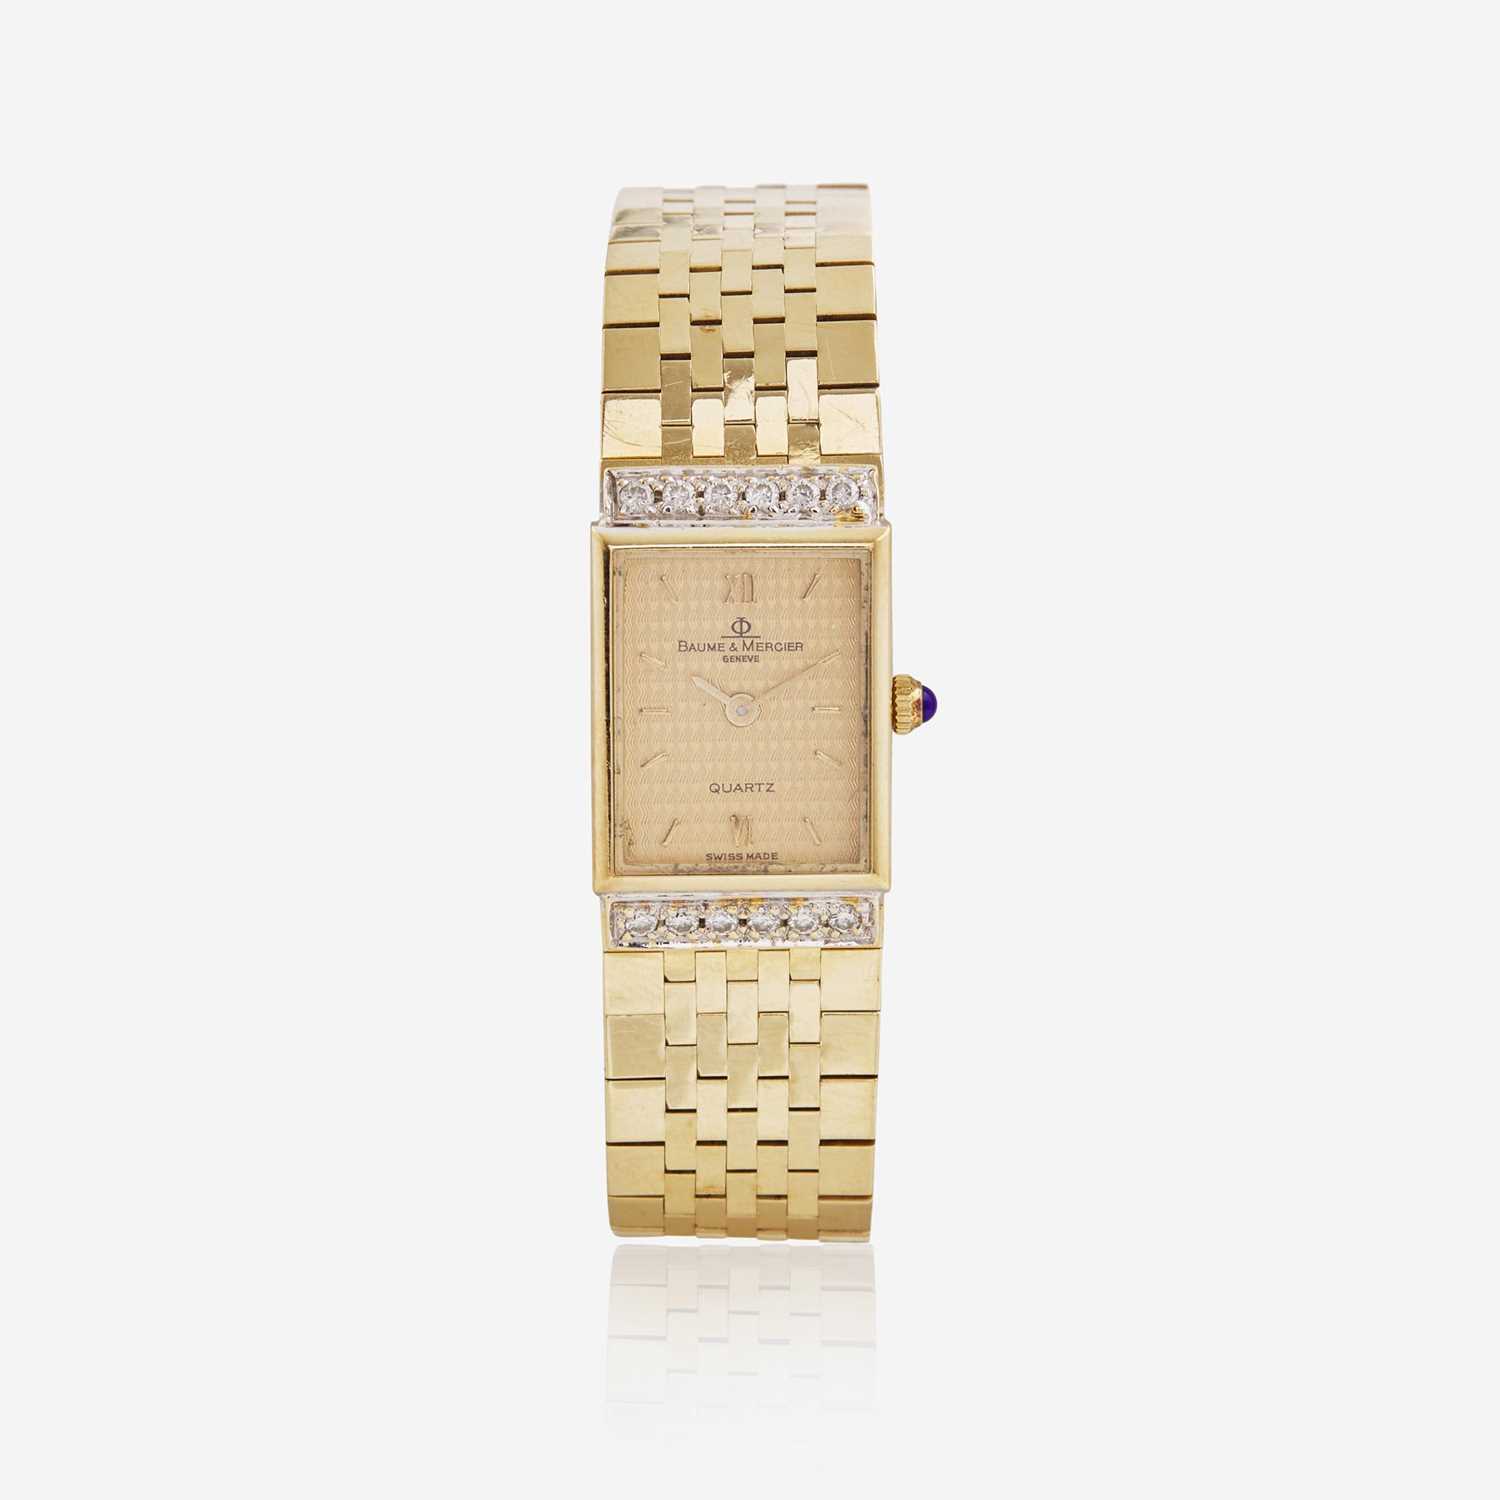 Lot 75 - A Baume & Mercier 14K Yellow Gold and Diamond Watch